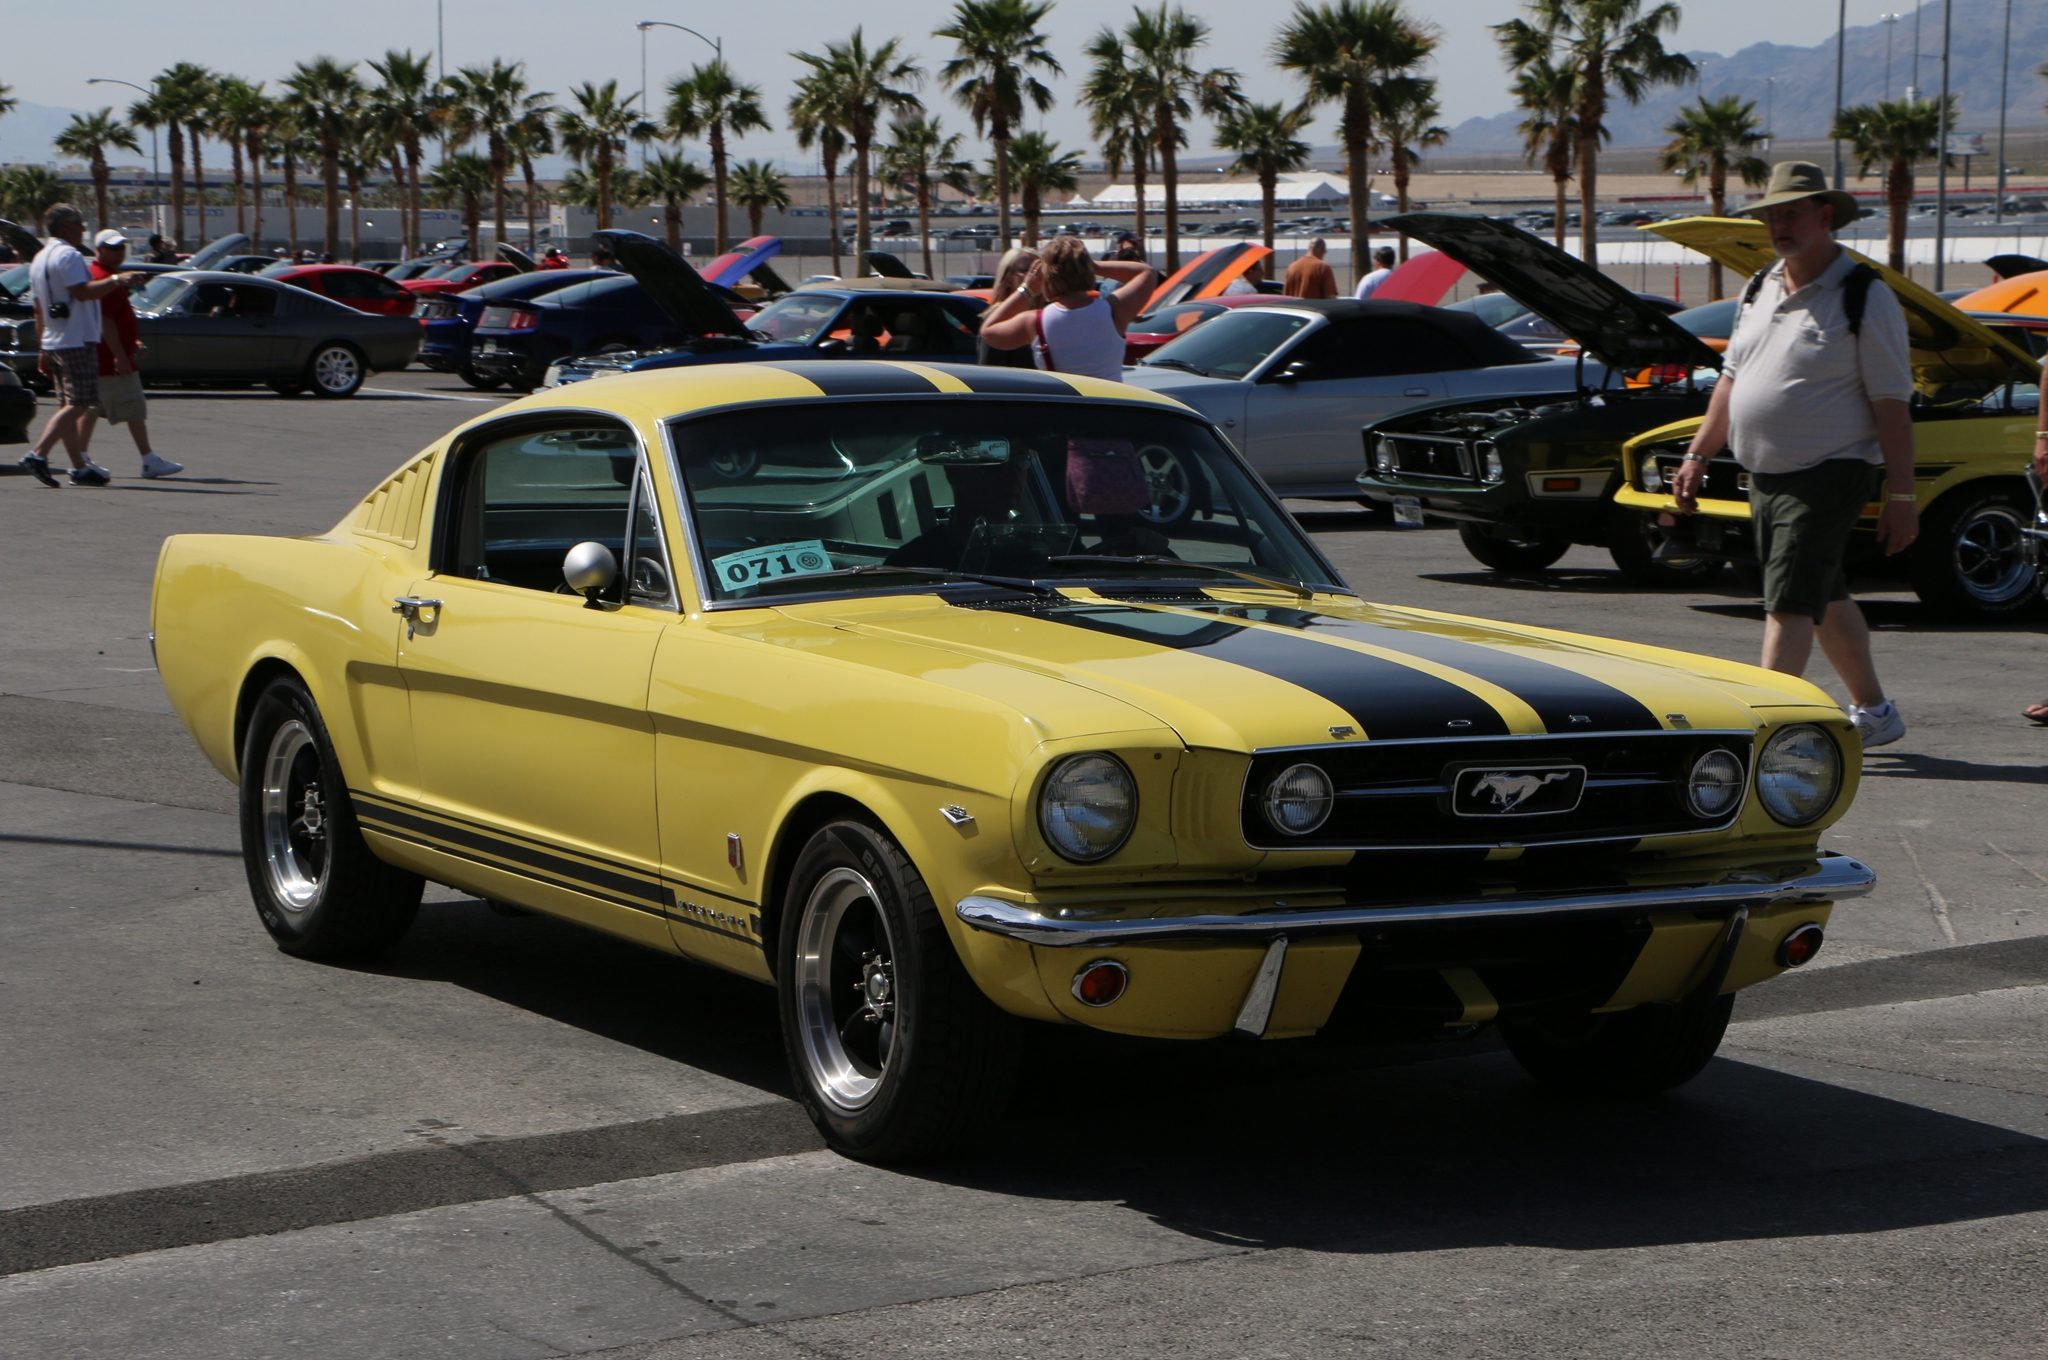 Ford-Mustang-50-Years-Las-Vegas-event-yellow-Mustang.jpg